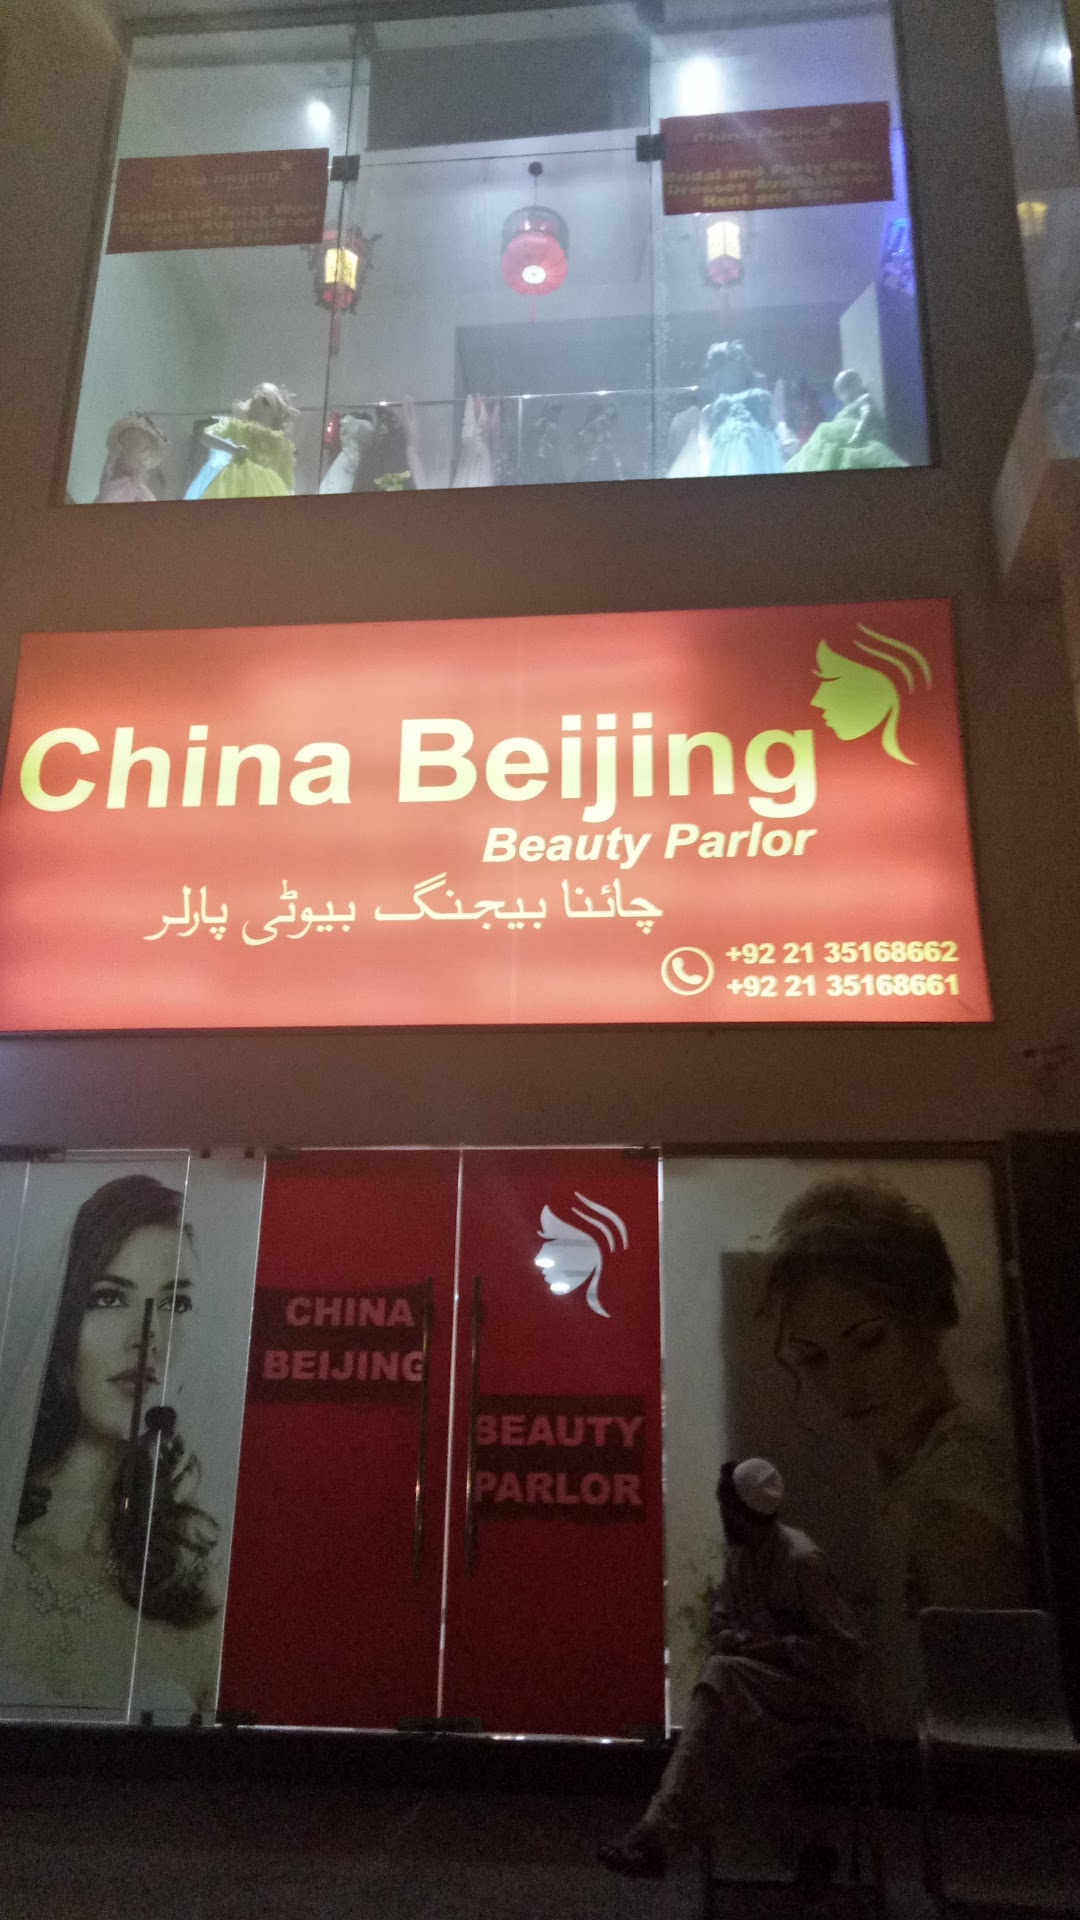 China Beijing Beauty Parlor